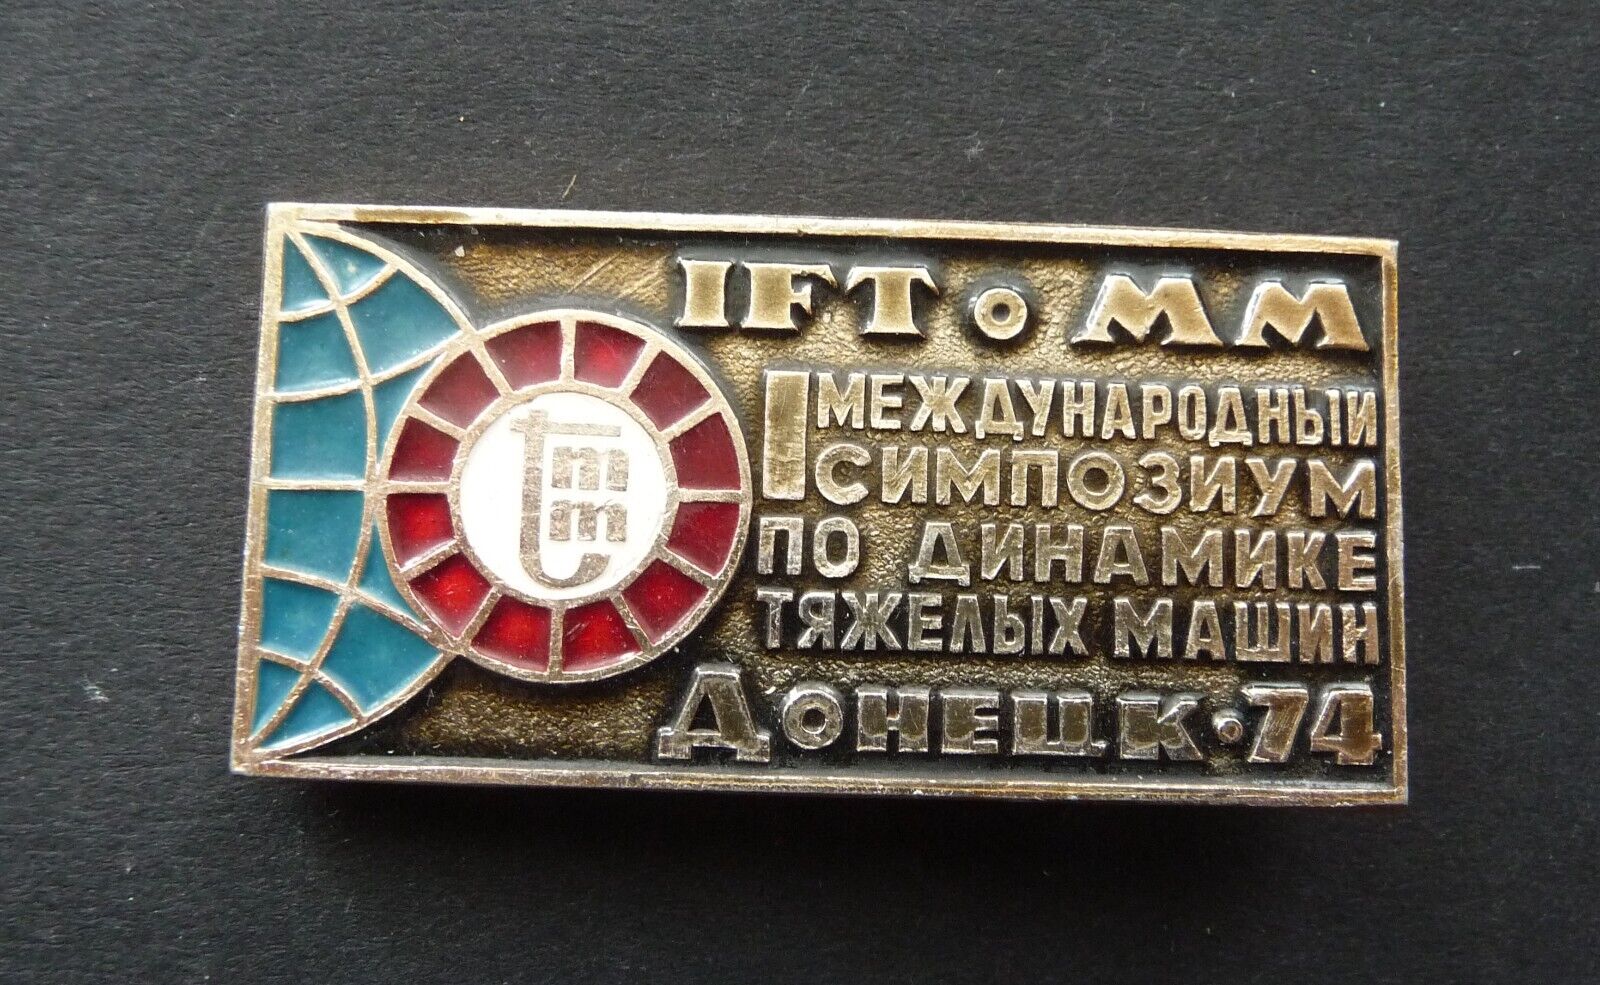 USSR Soviet Badge International Symposium on Dynamics of Heavy Machines Donetsk